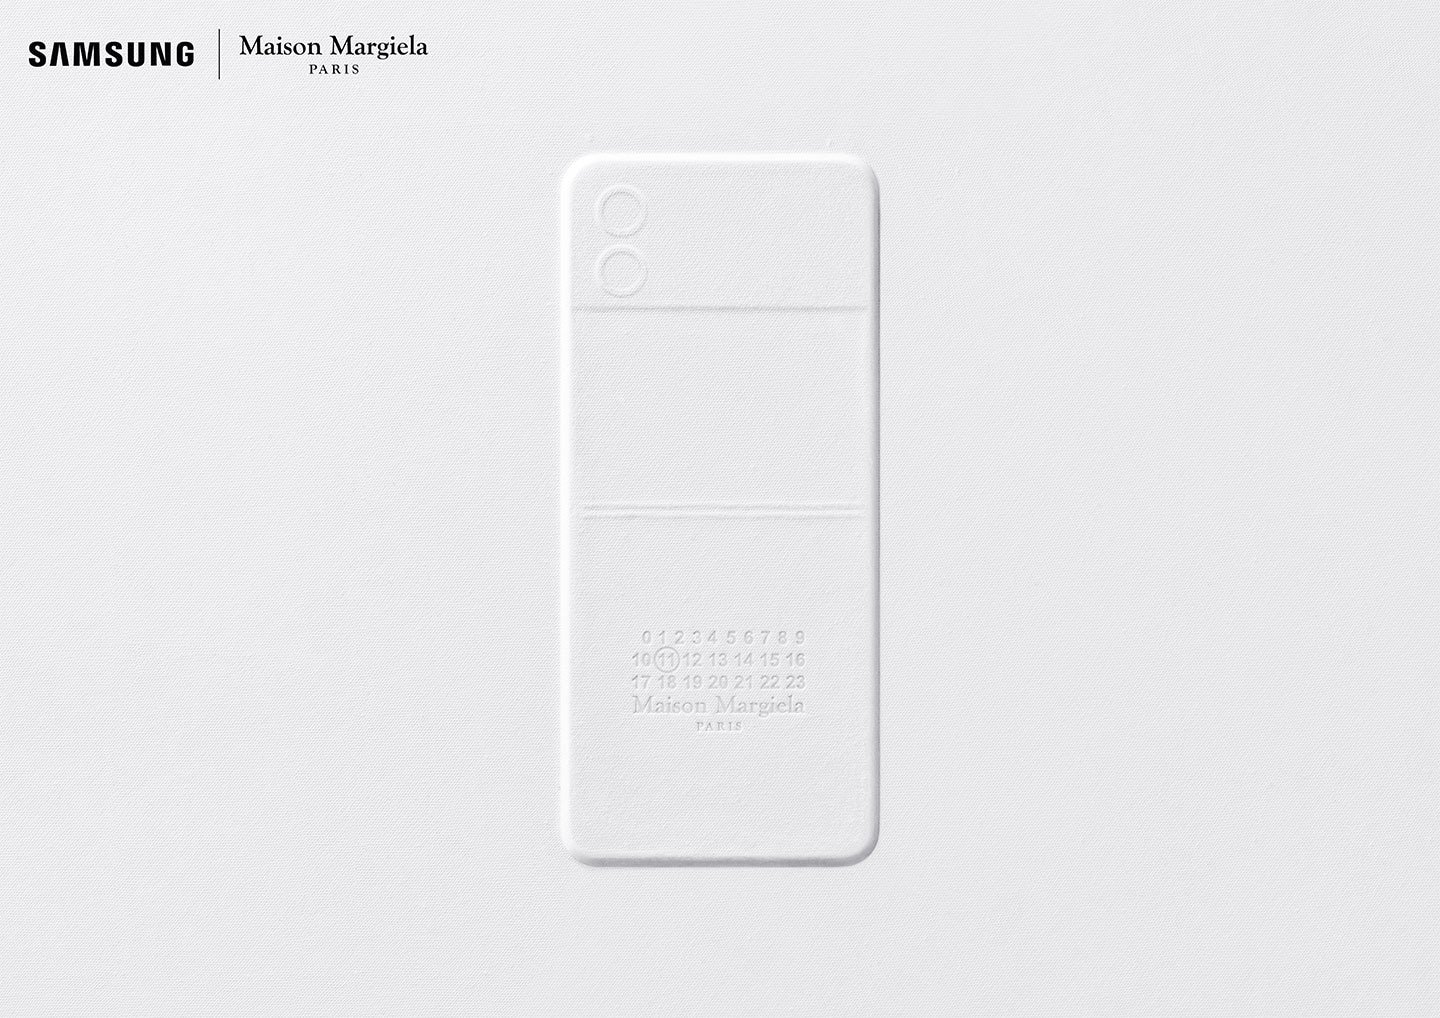 Samsung Galaxy Z Flip 4 Maison Margiela Edition is coming soon 